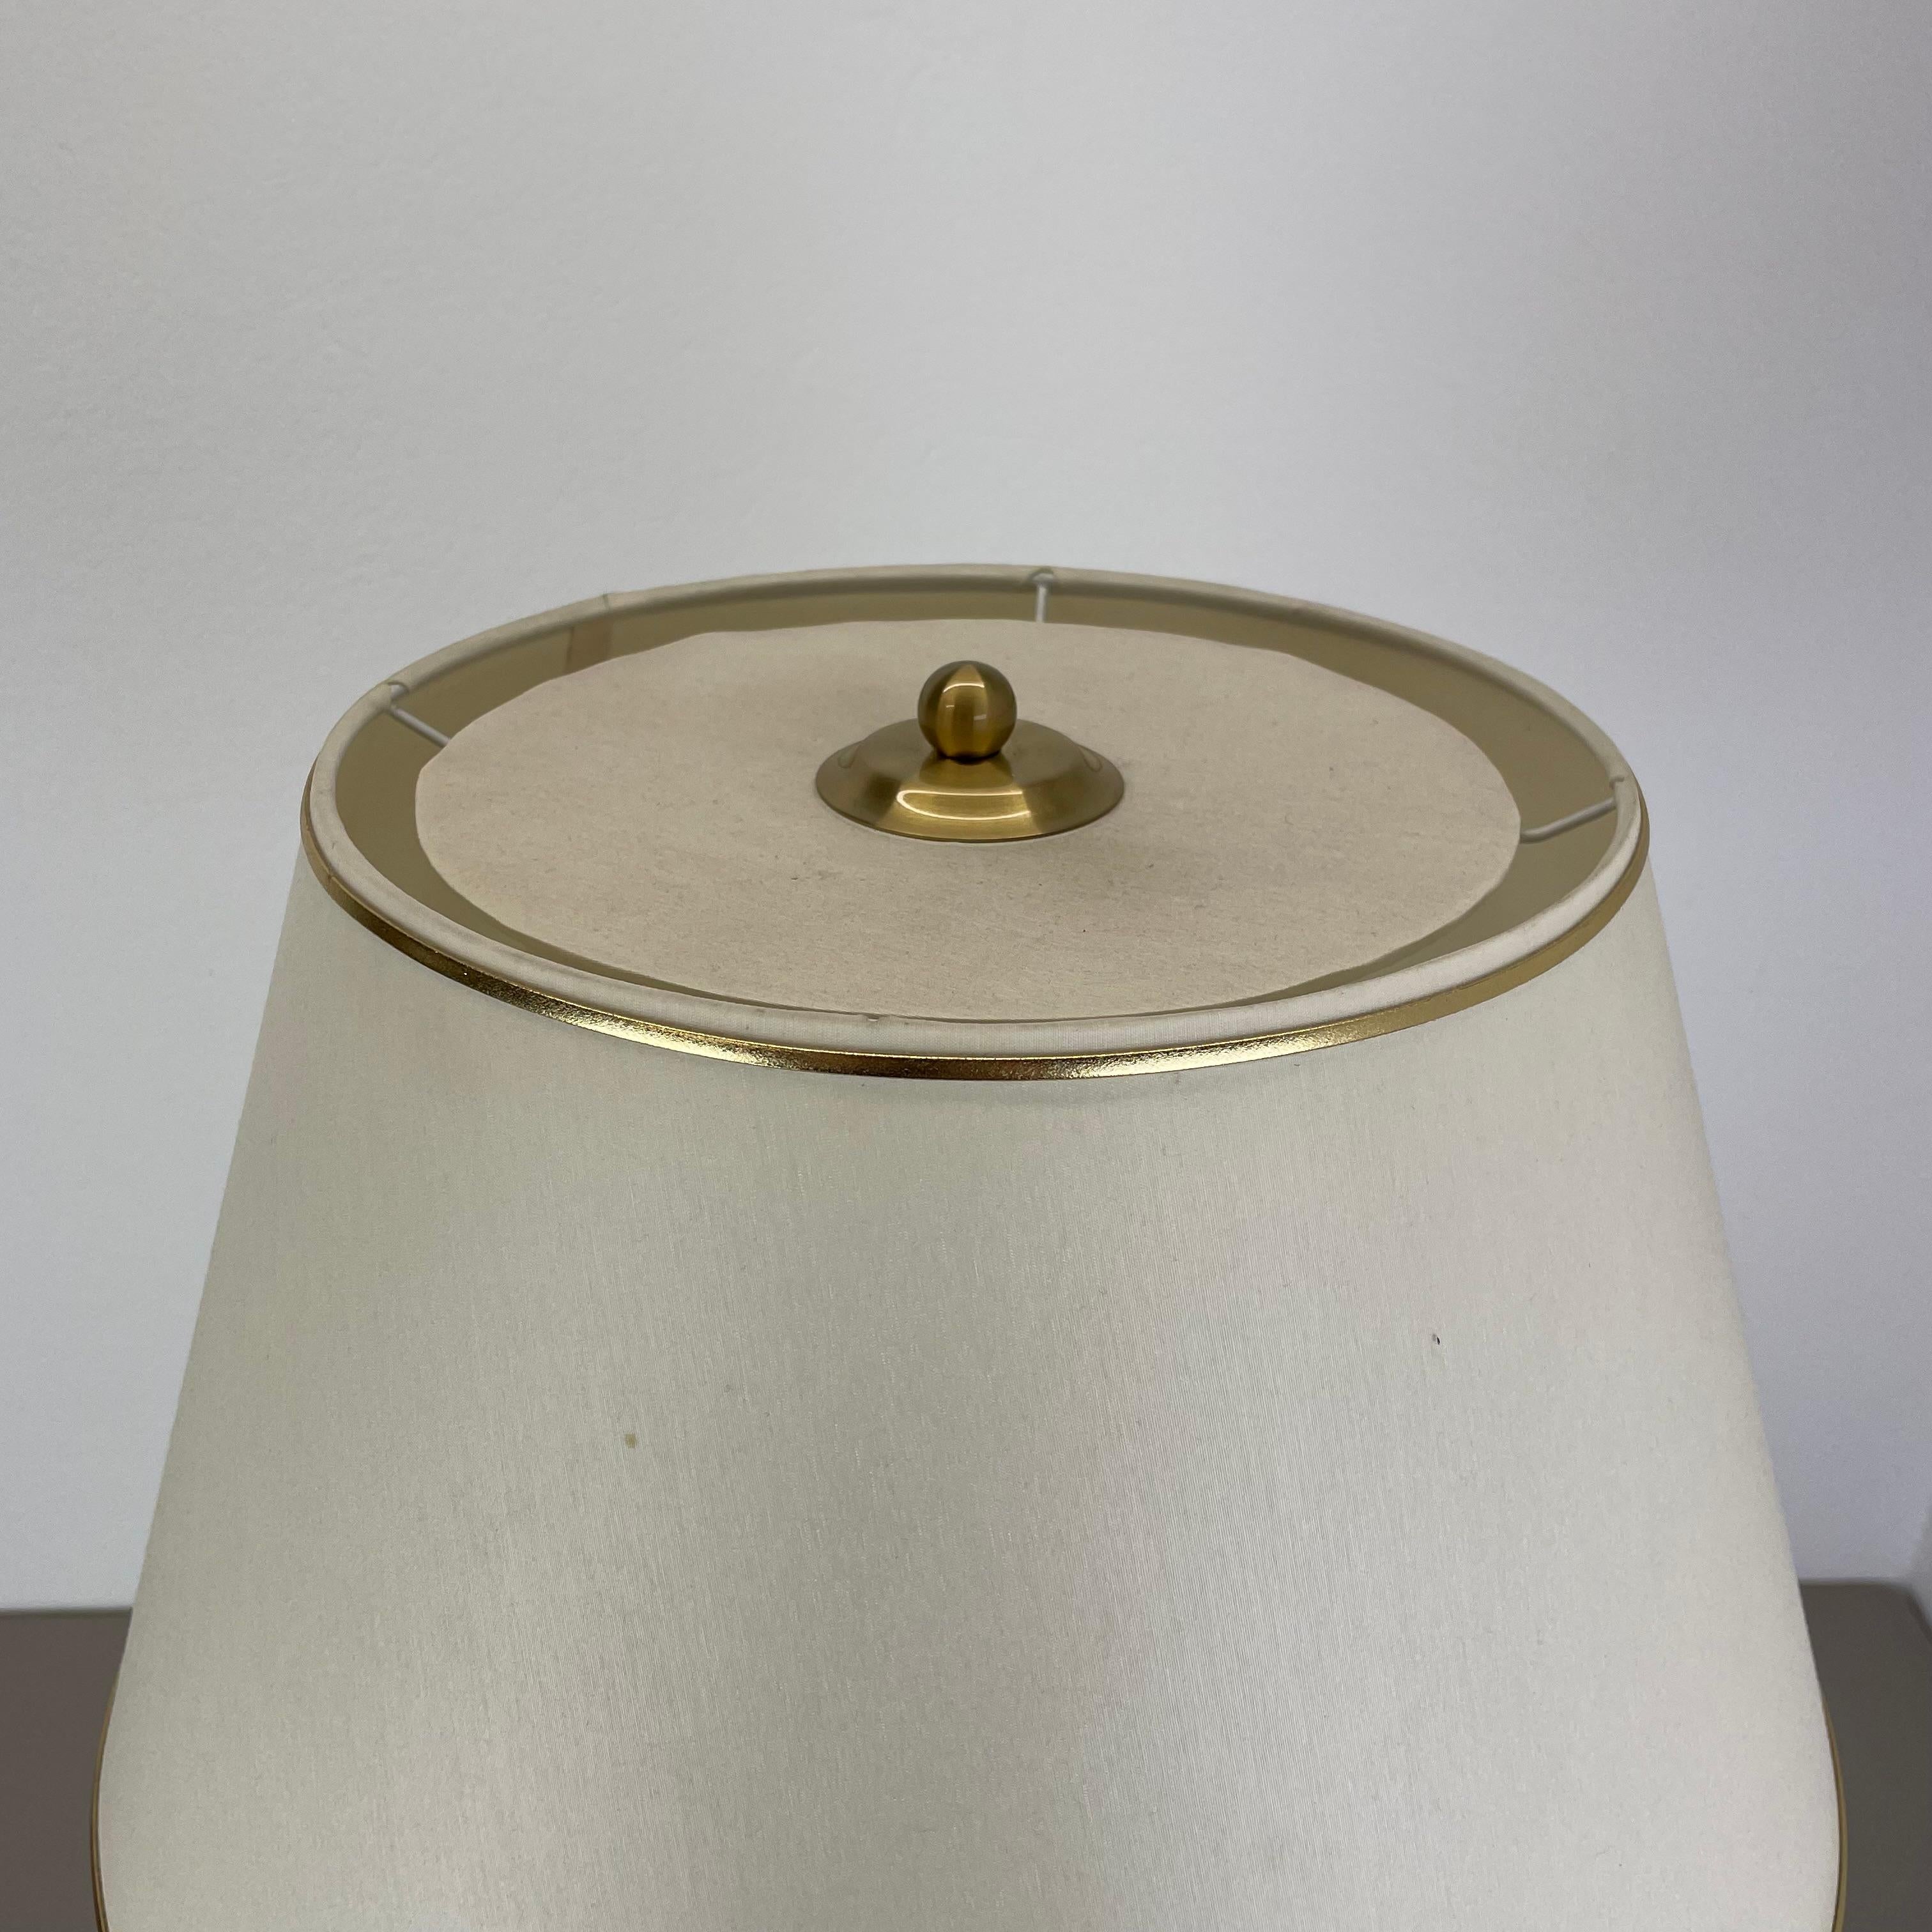 heavy 71cm Hollywood Regency Style Brass and Acryl Table Light, Italy 1970s For Sale 8